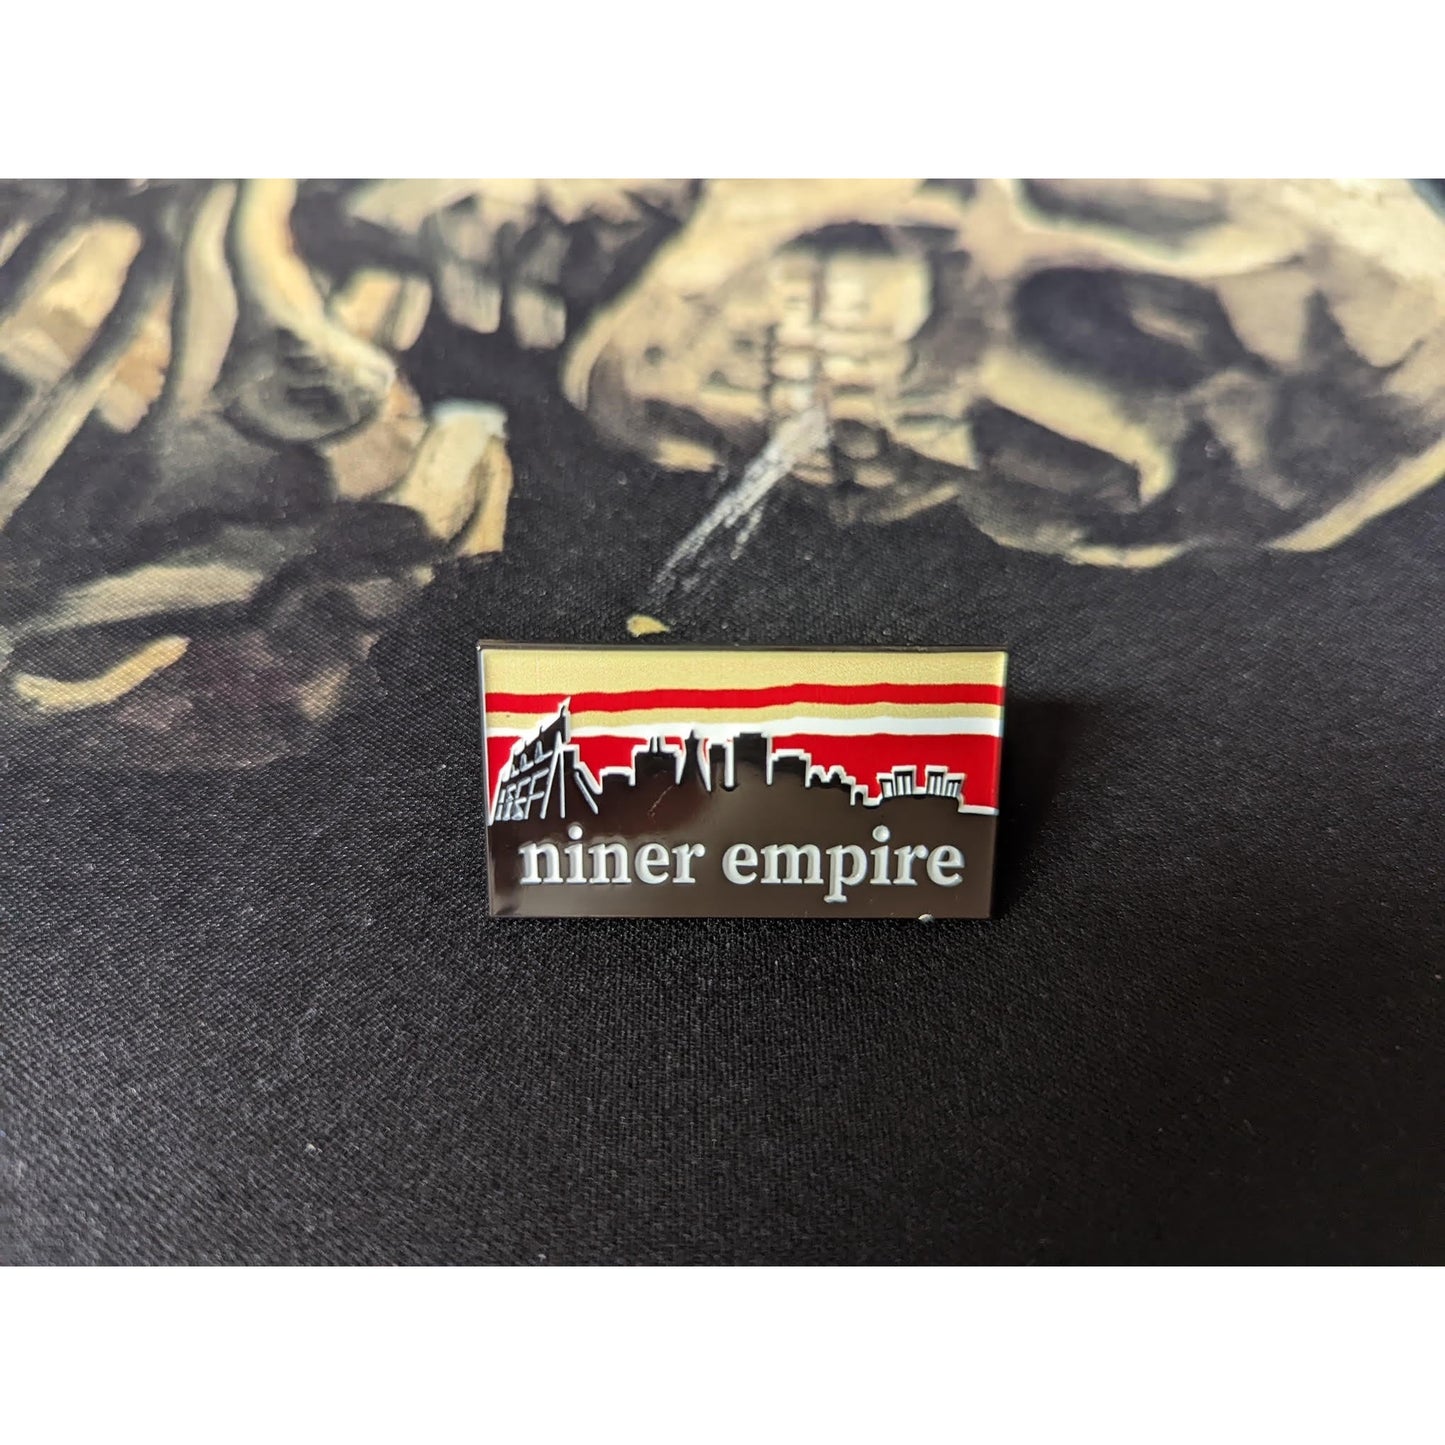 Fresh Society "Niner Empire" Pin